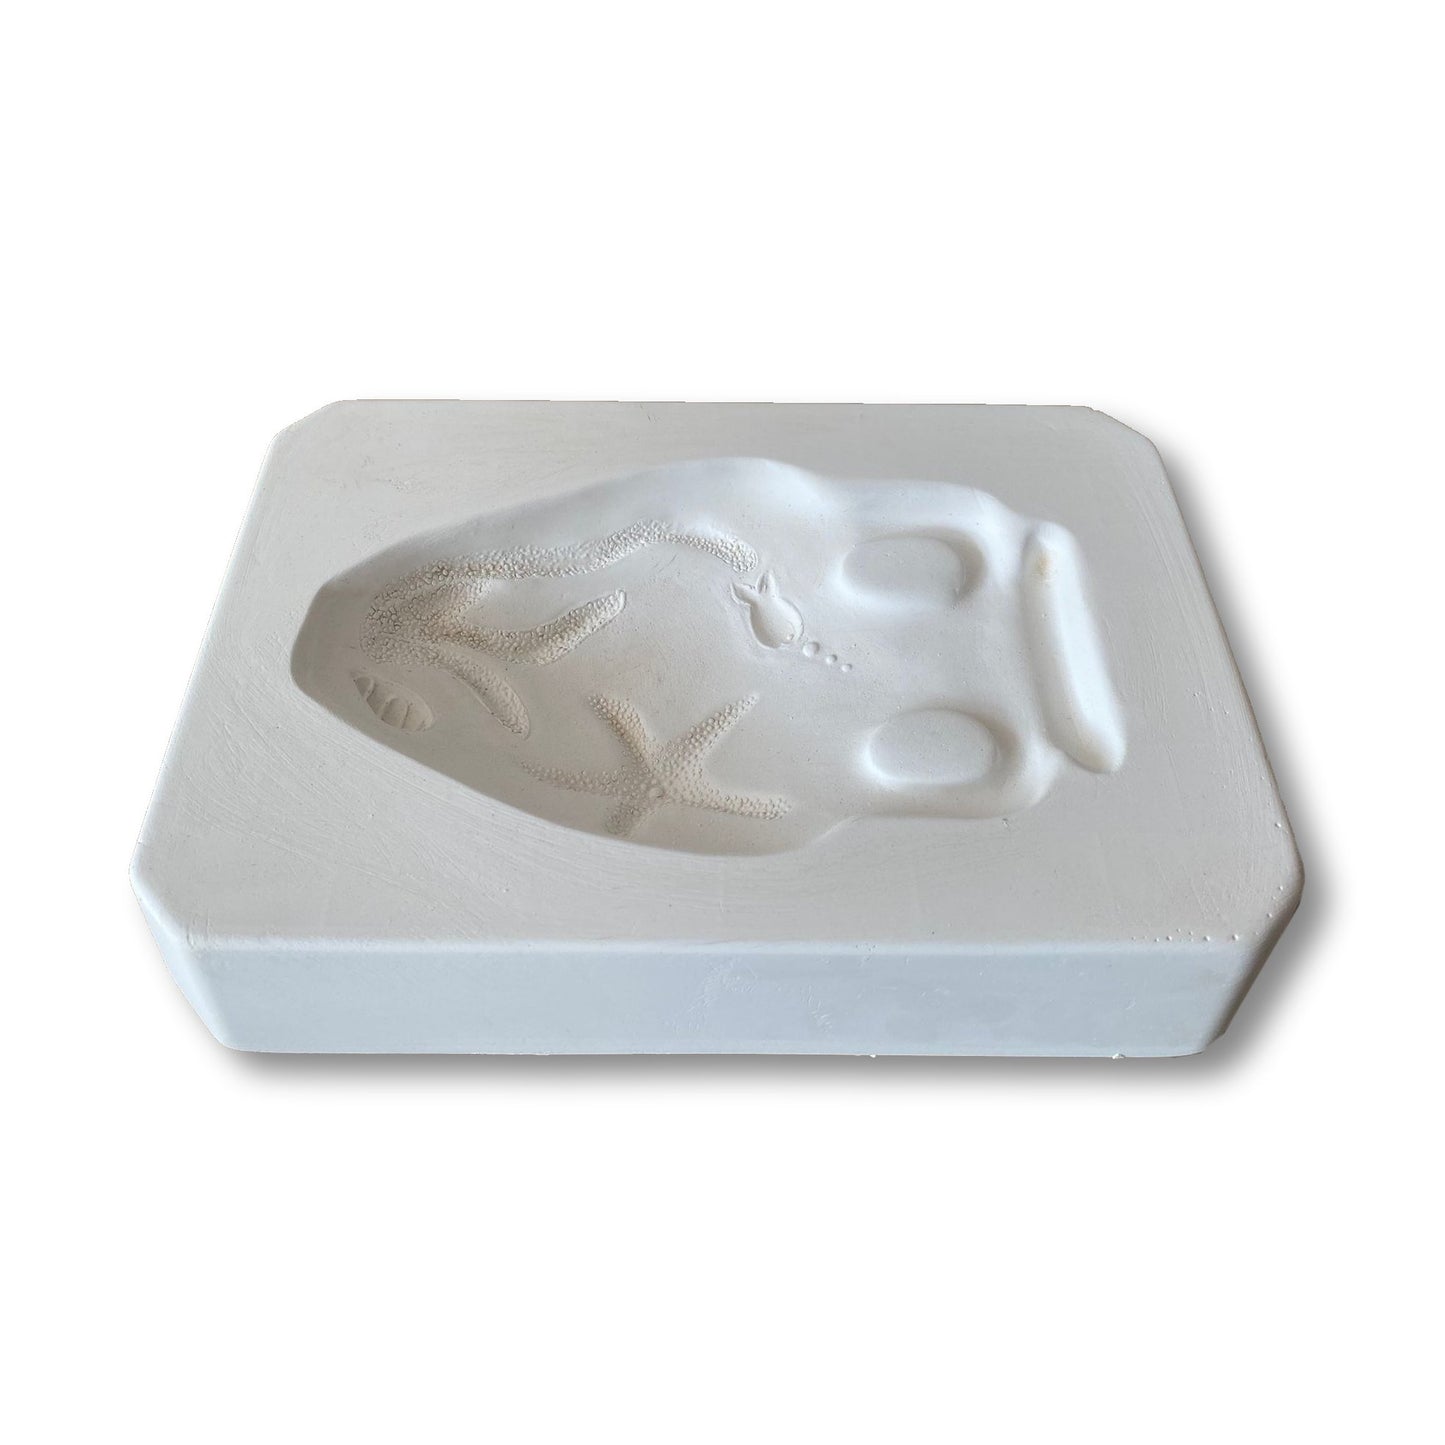 Ceramic pottery Mold, PRESS-MOLDAMPHORA CUBE Clay Press